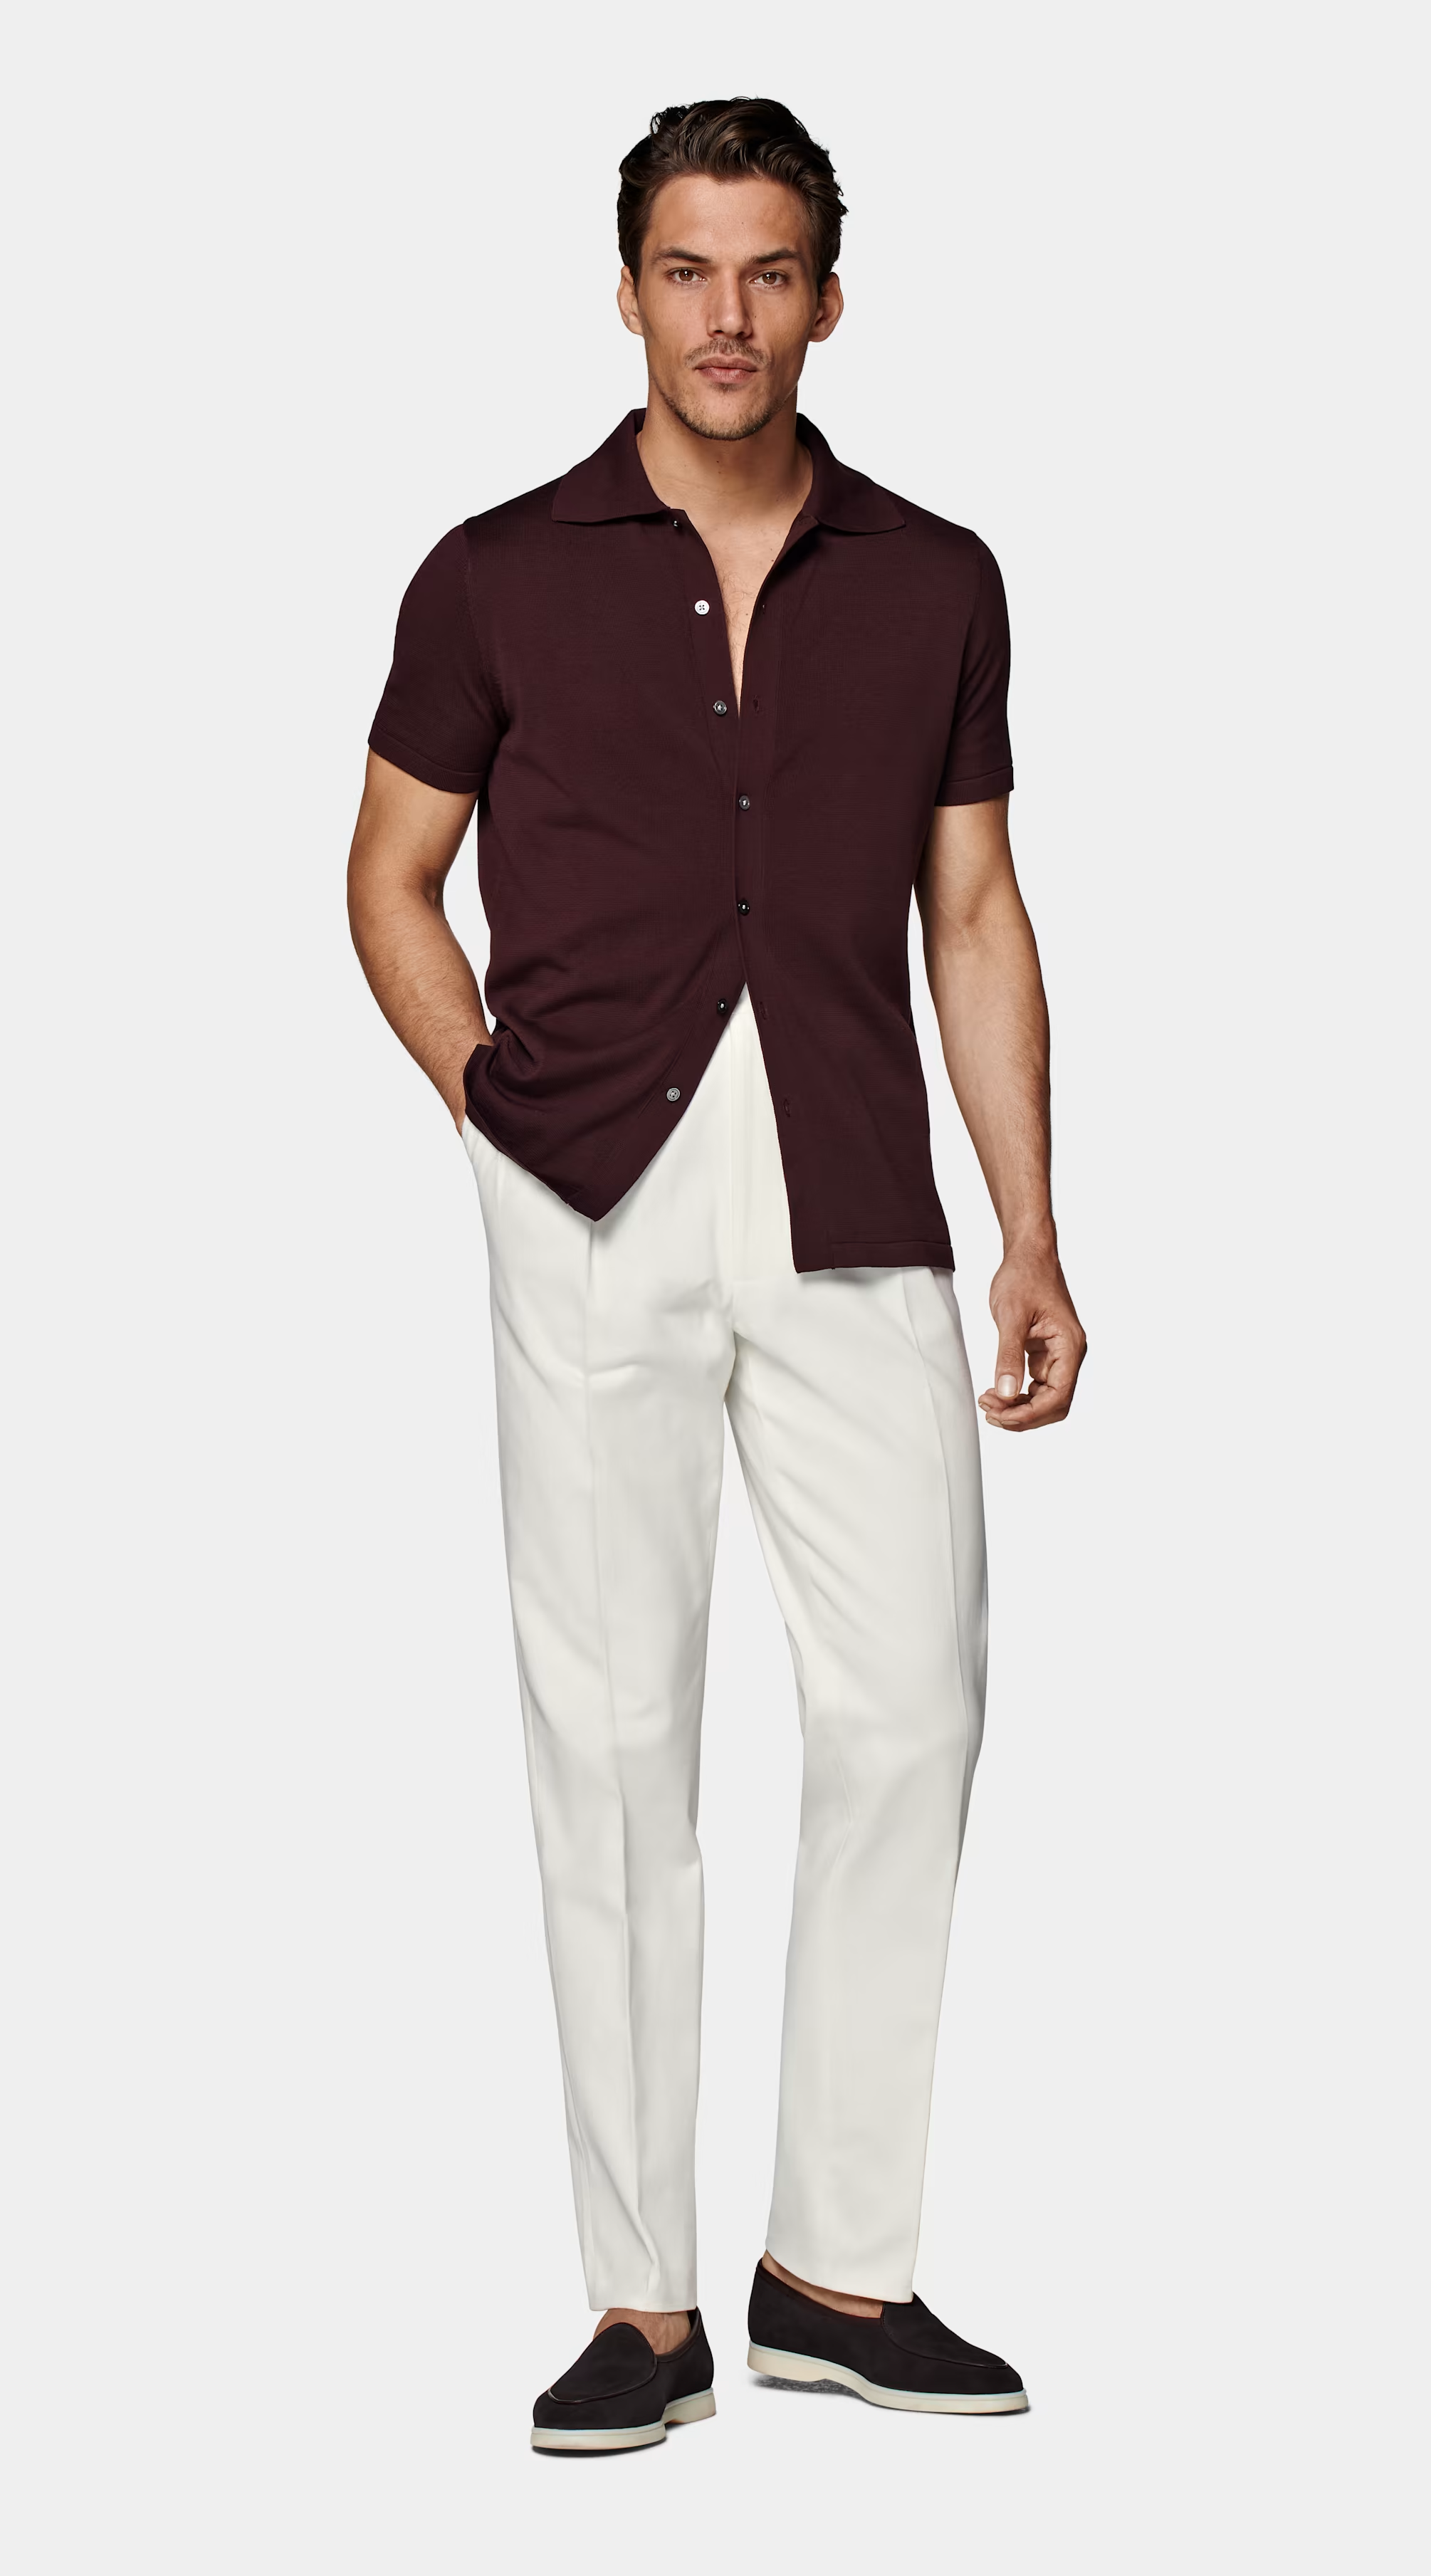 Burgundy Polo Shirt: A Classic Wardrobe
Staple